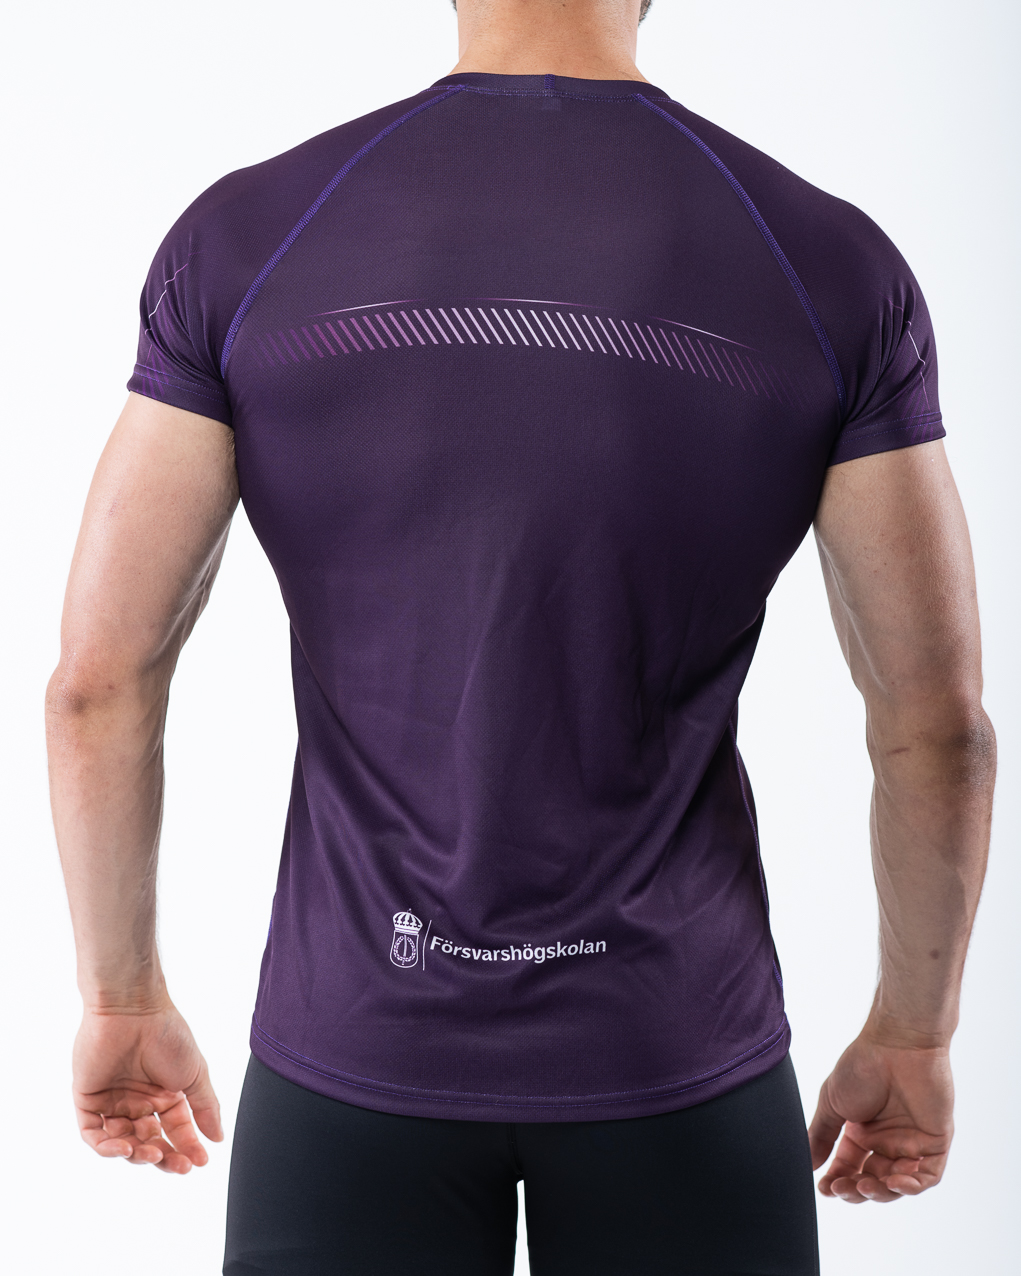 Men's t-shirt, purple, back